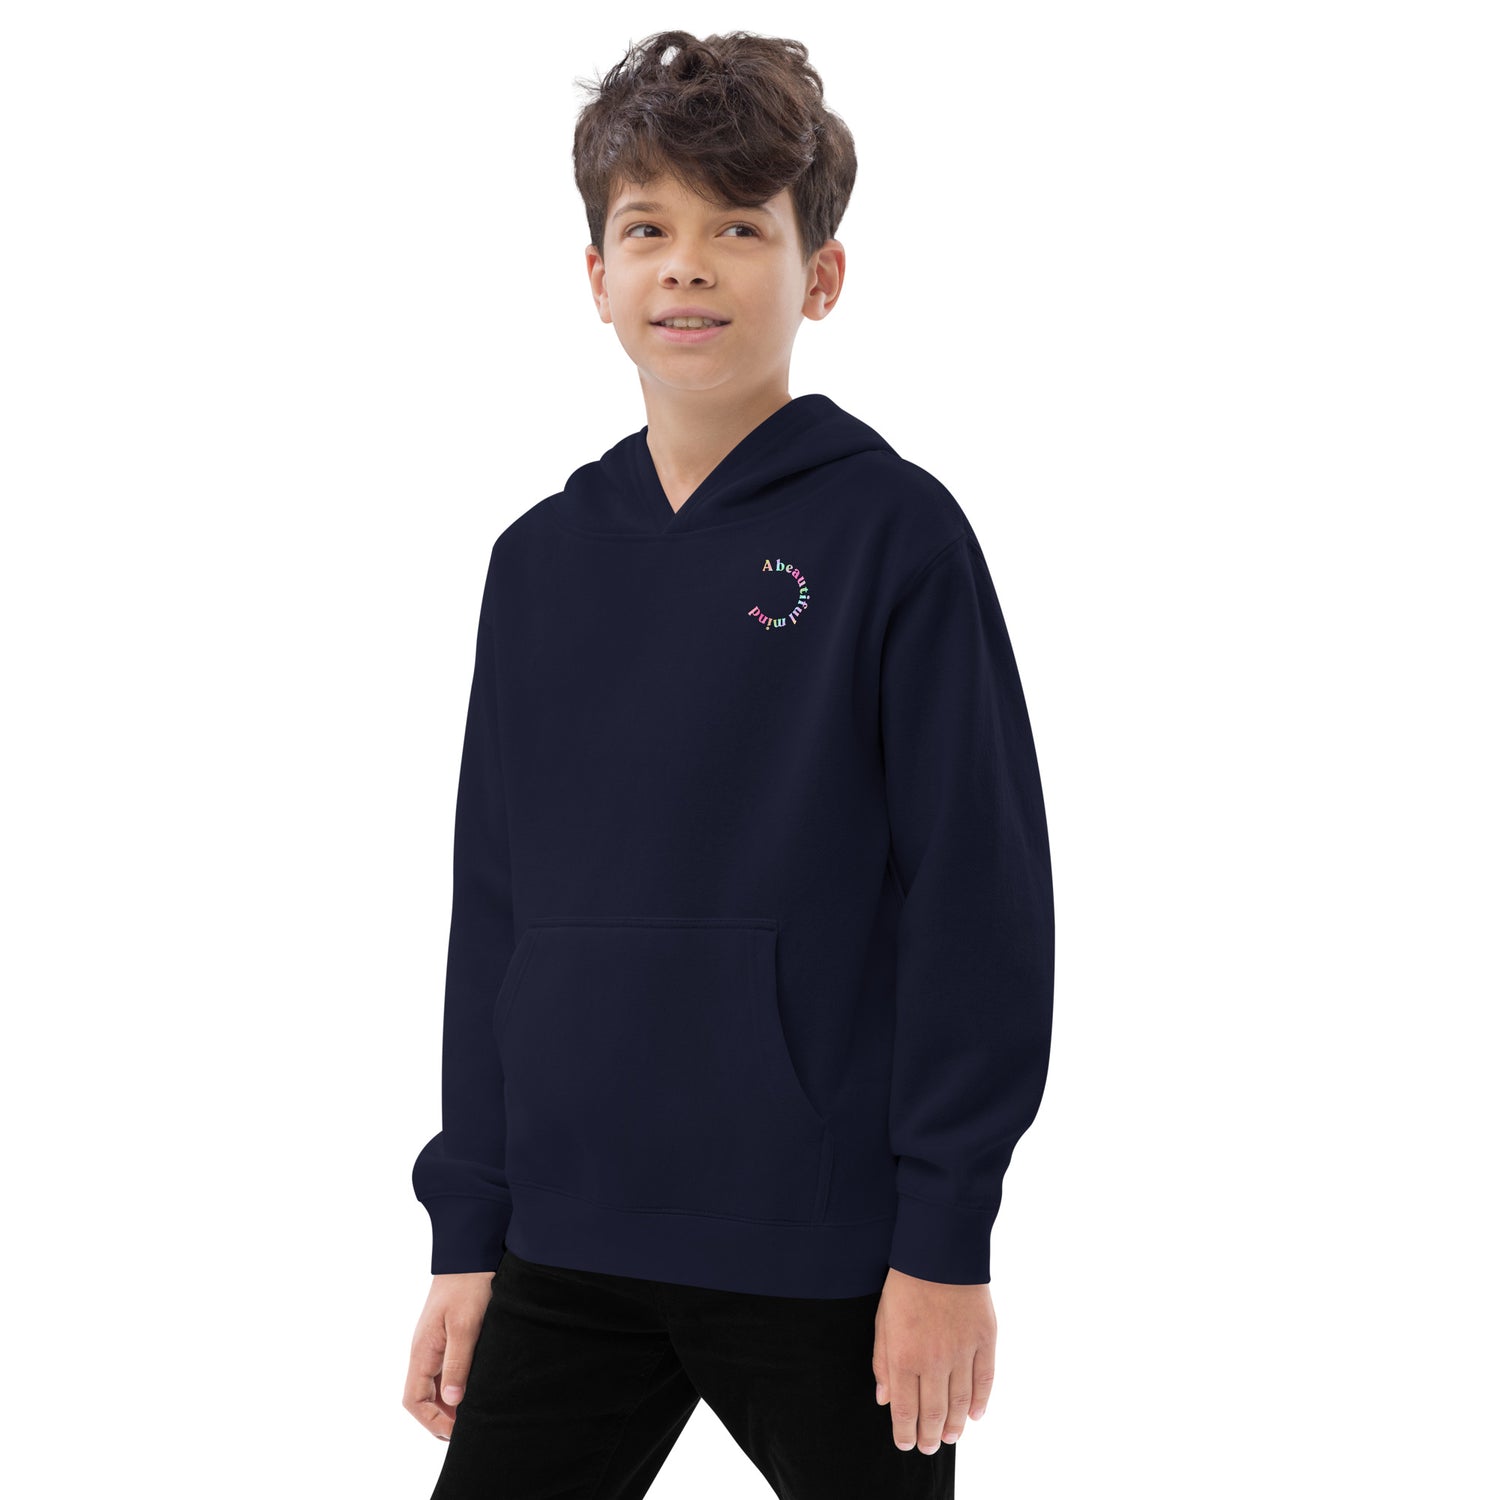 Indigo Kidswear hoodie featuring  "A beautiful mind" design.